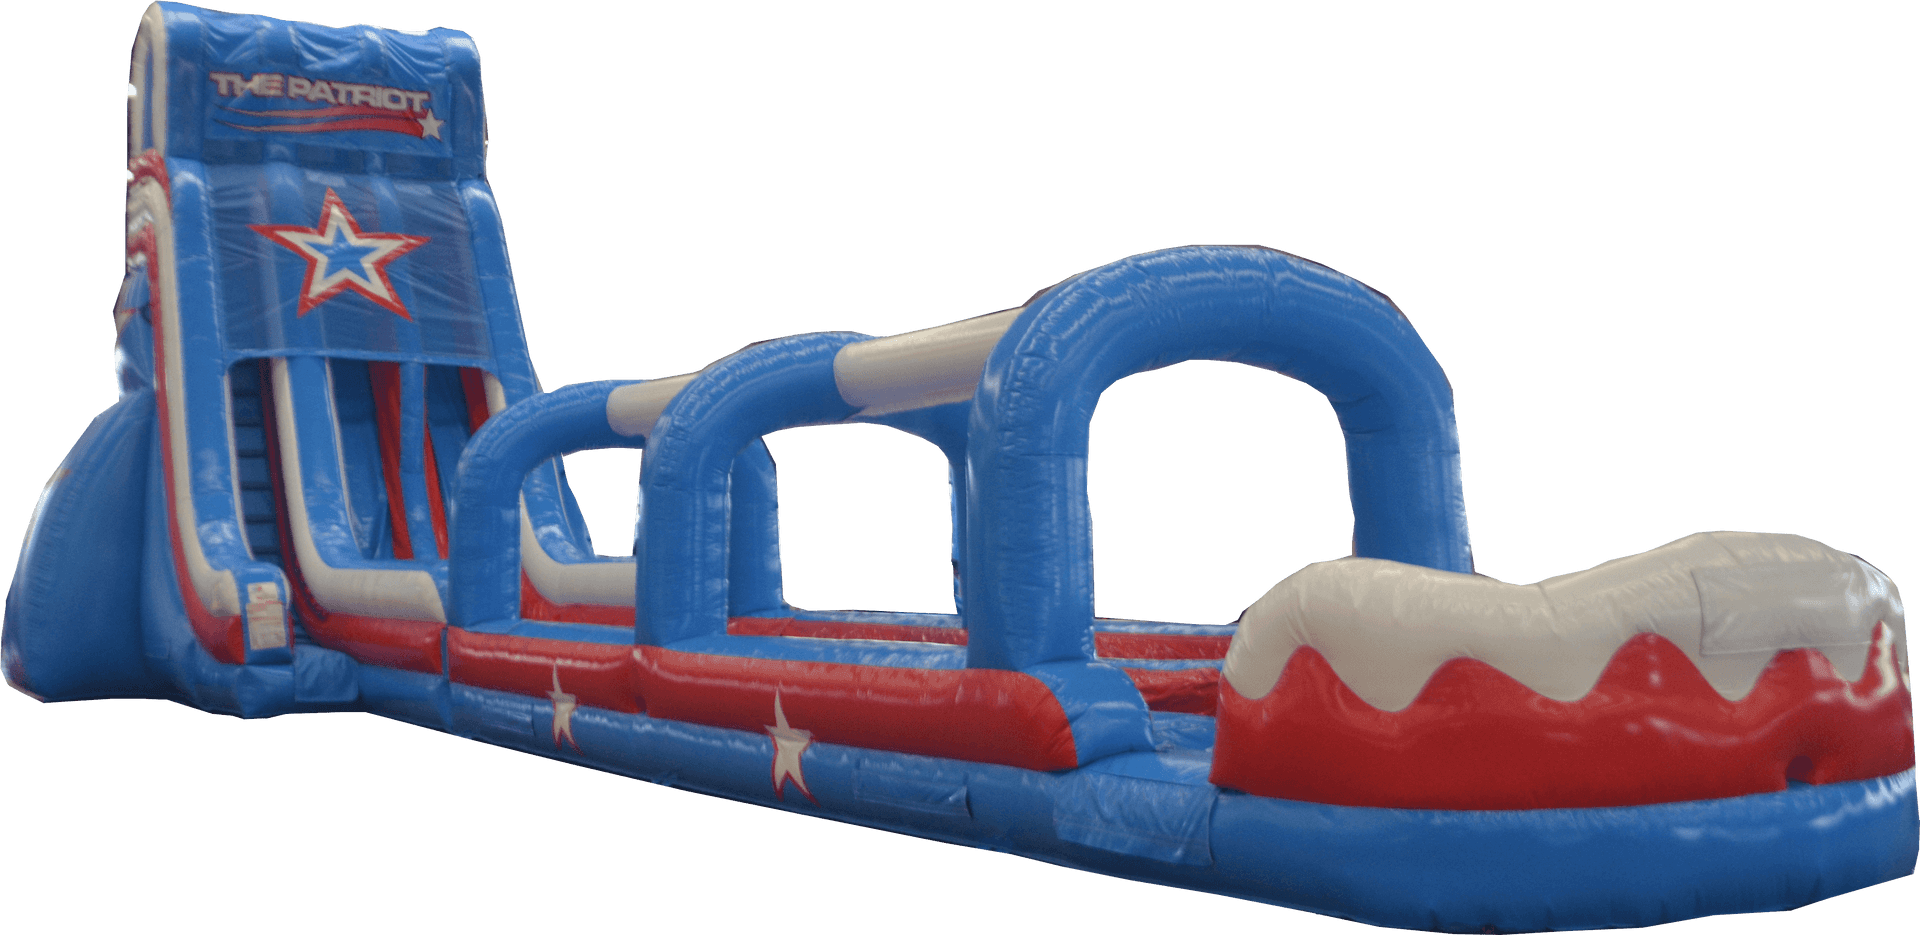 Patriotic Inflatable Water Slide PNG image